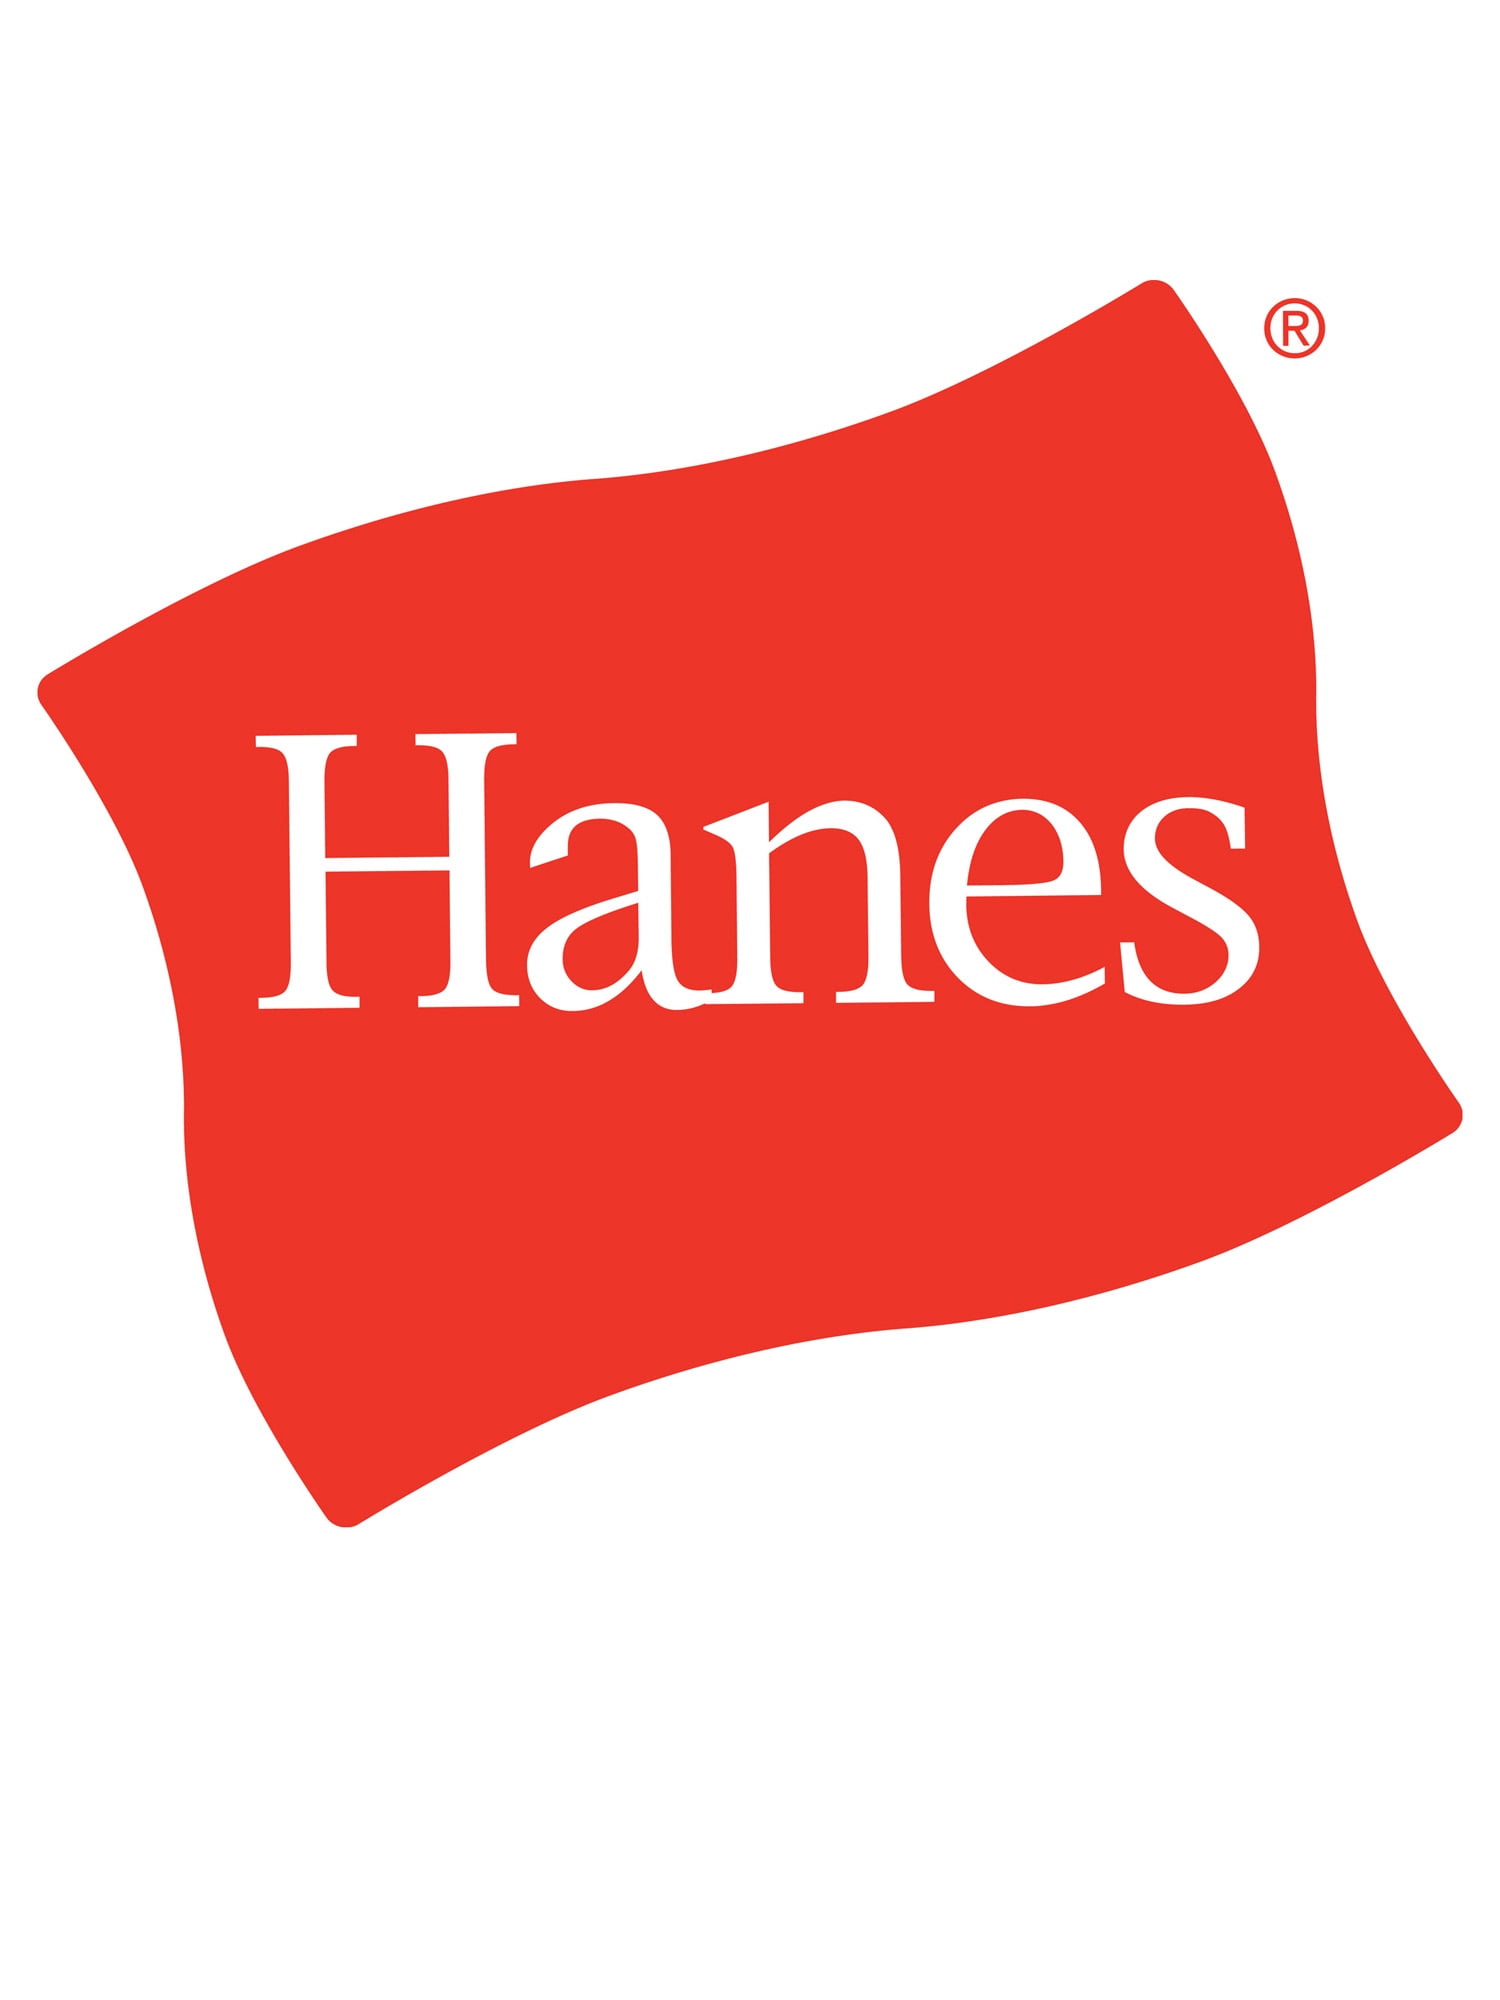 Hanes Womens 10-Pack Cotton Briefs Lady Underwear Panties Assorted Colors  Prints - Helia Beer Co